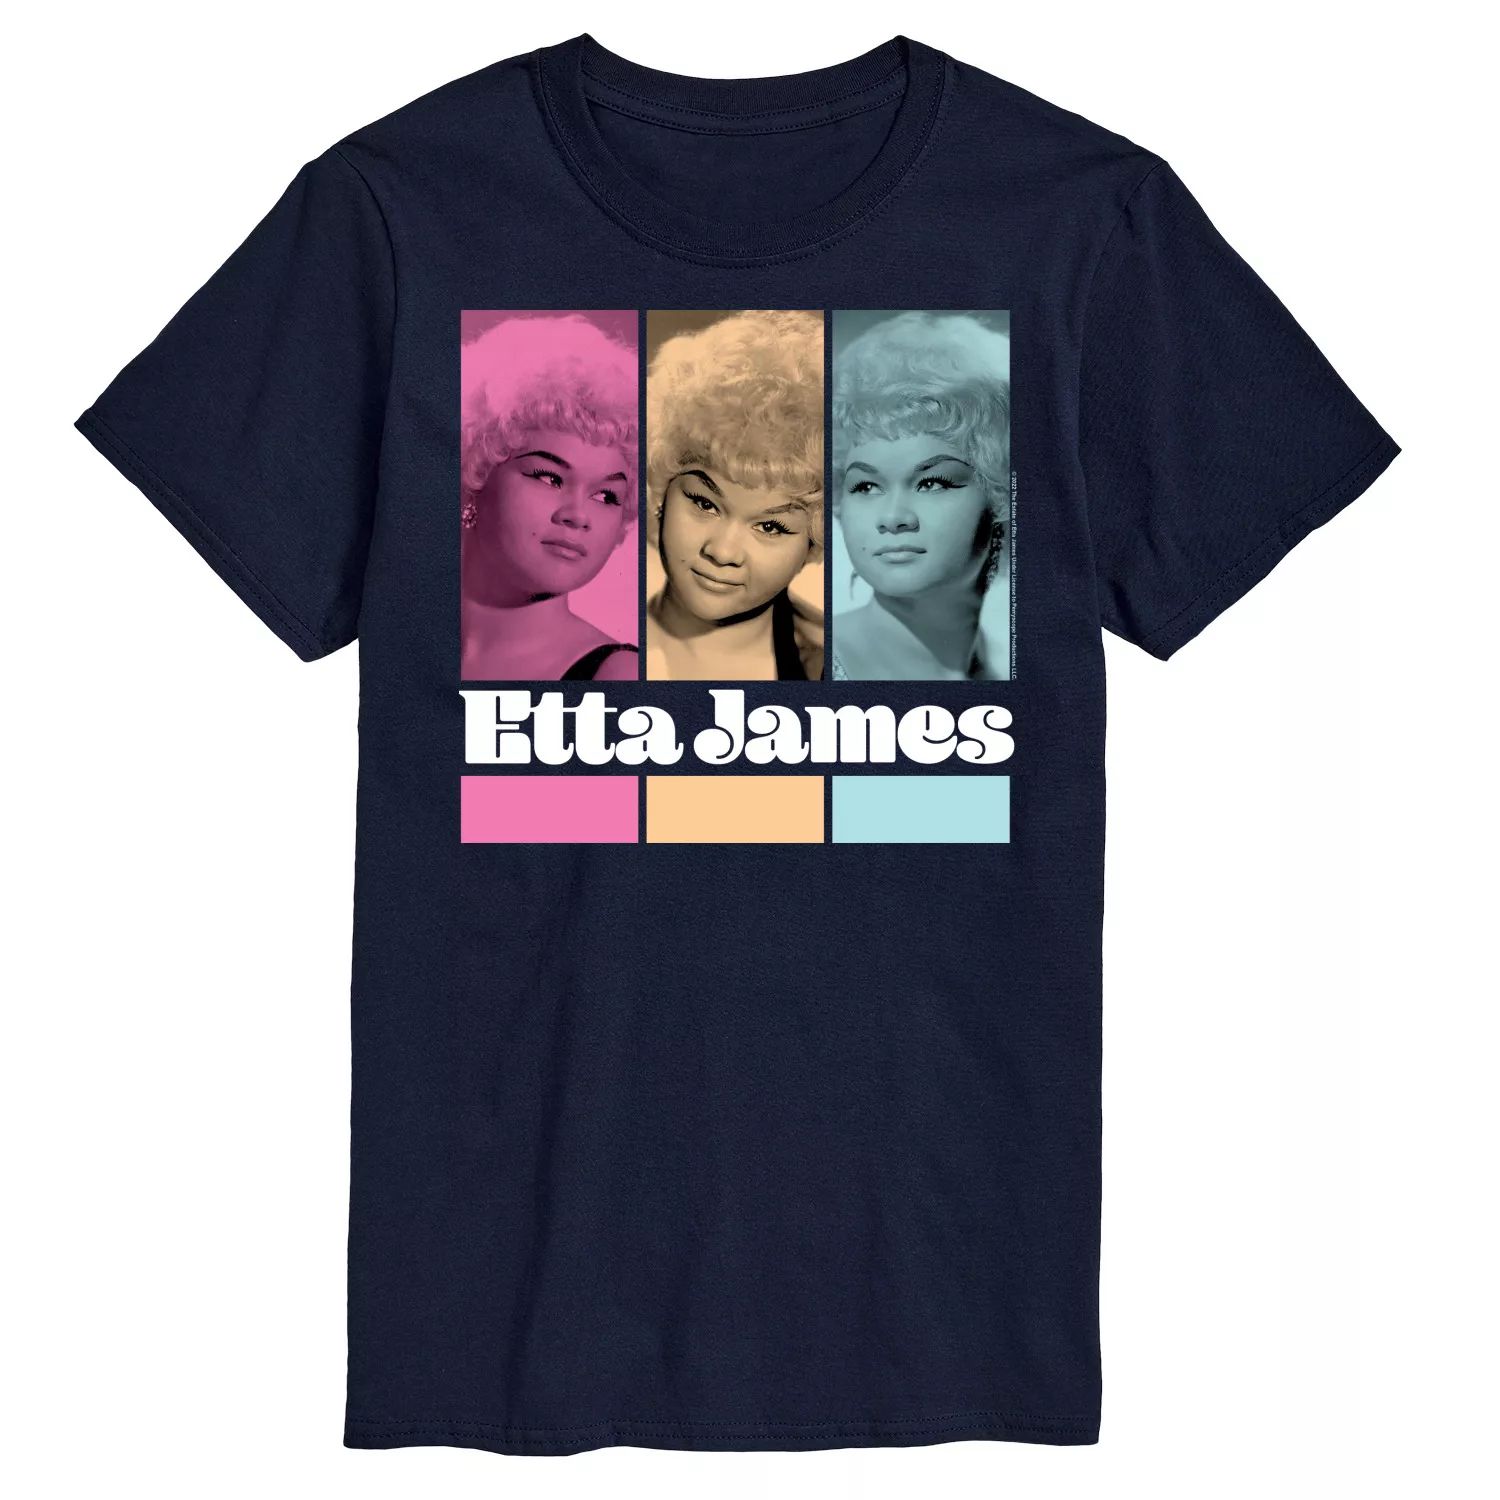 Футболка Big & Tall Etta James с сеткой License, синий